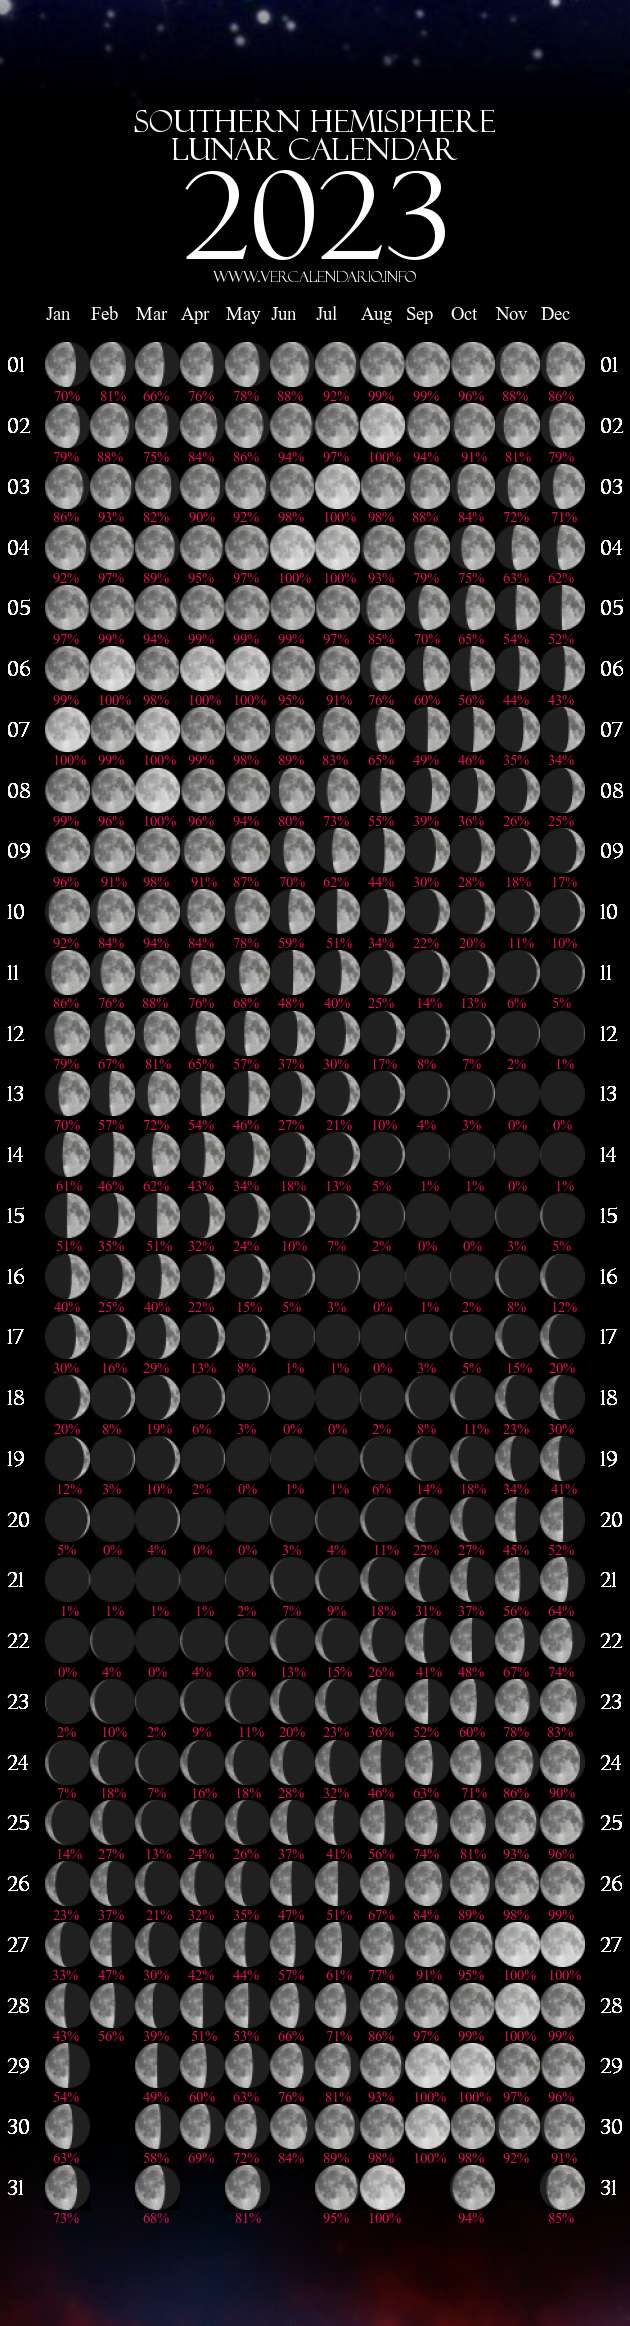 Lunar Calendar 2023 (Southern Hemisphere)